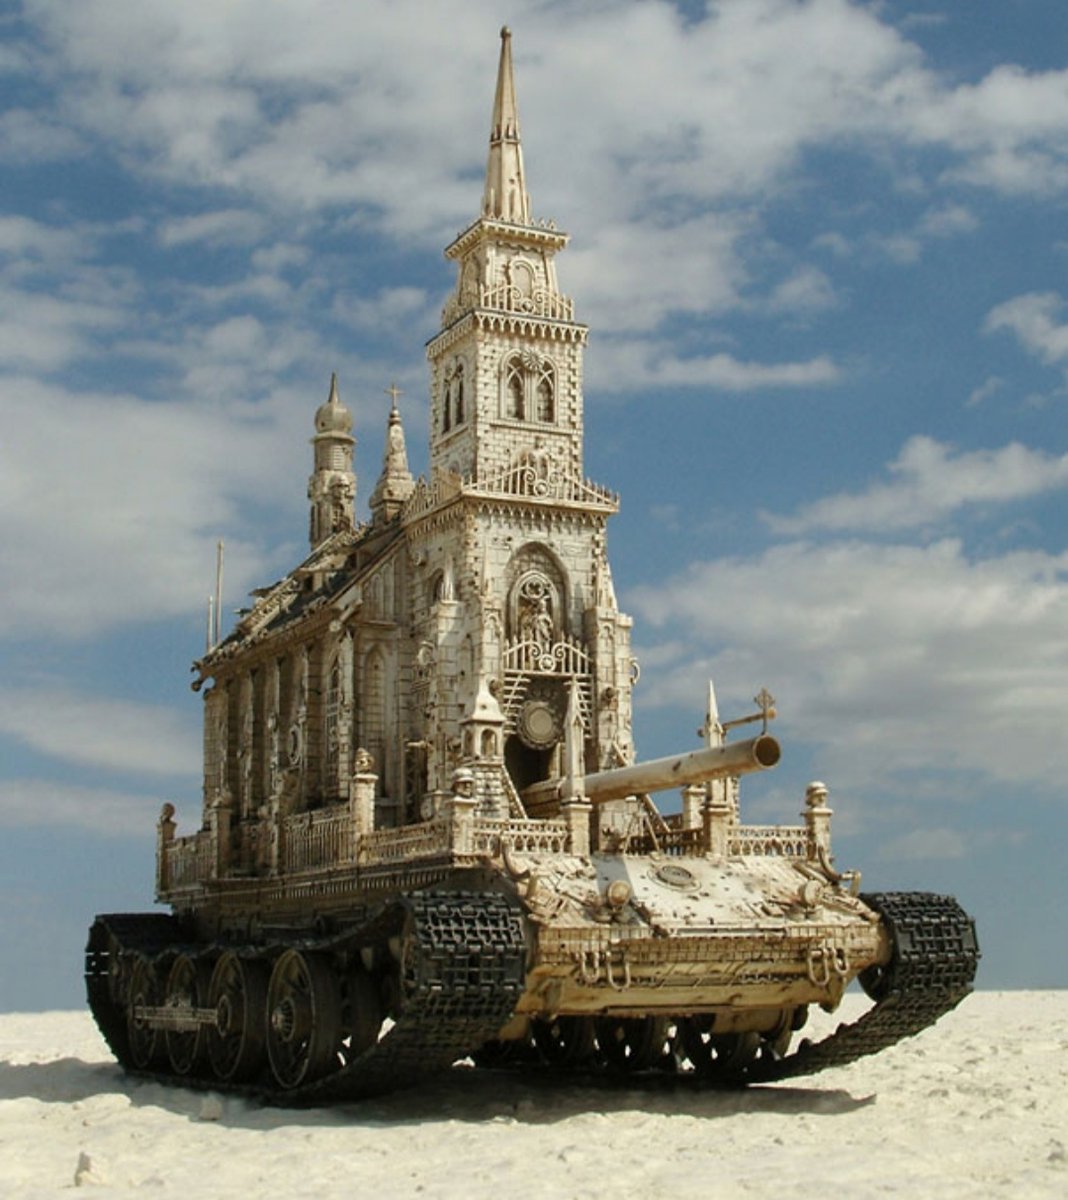 Super Tank Sunday - M99 Church Tank, well it is Sunday!!!!! 😍😍 #tanks #armor #ilovetanks #tank #supertanksunday #churchtank